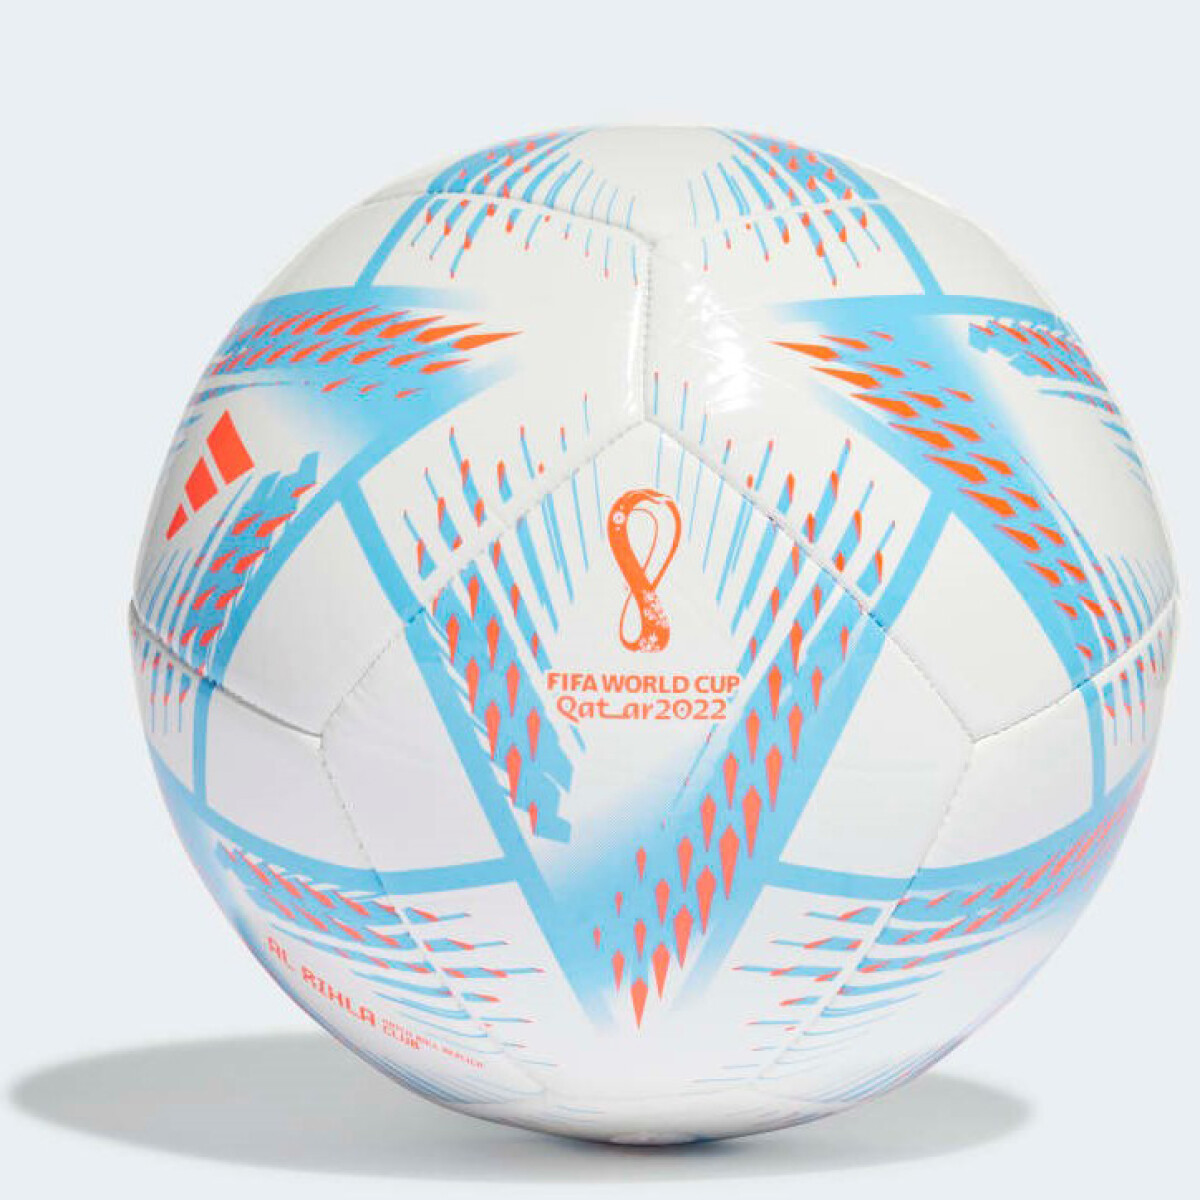 Pelota Fifa World Cup Adidas - Blanco/Celeste/Naranja 